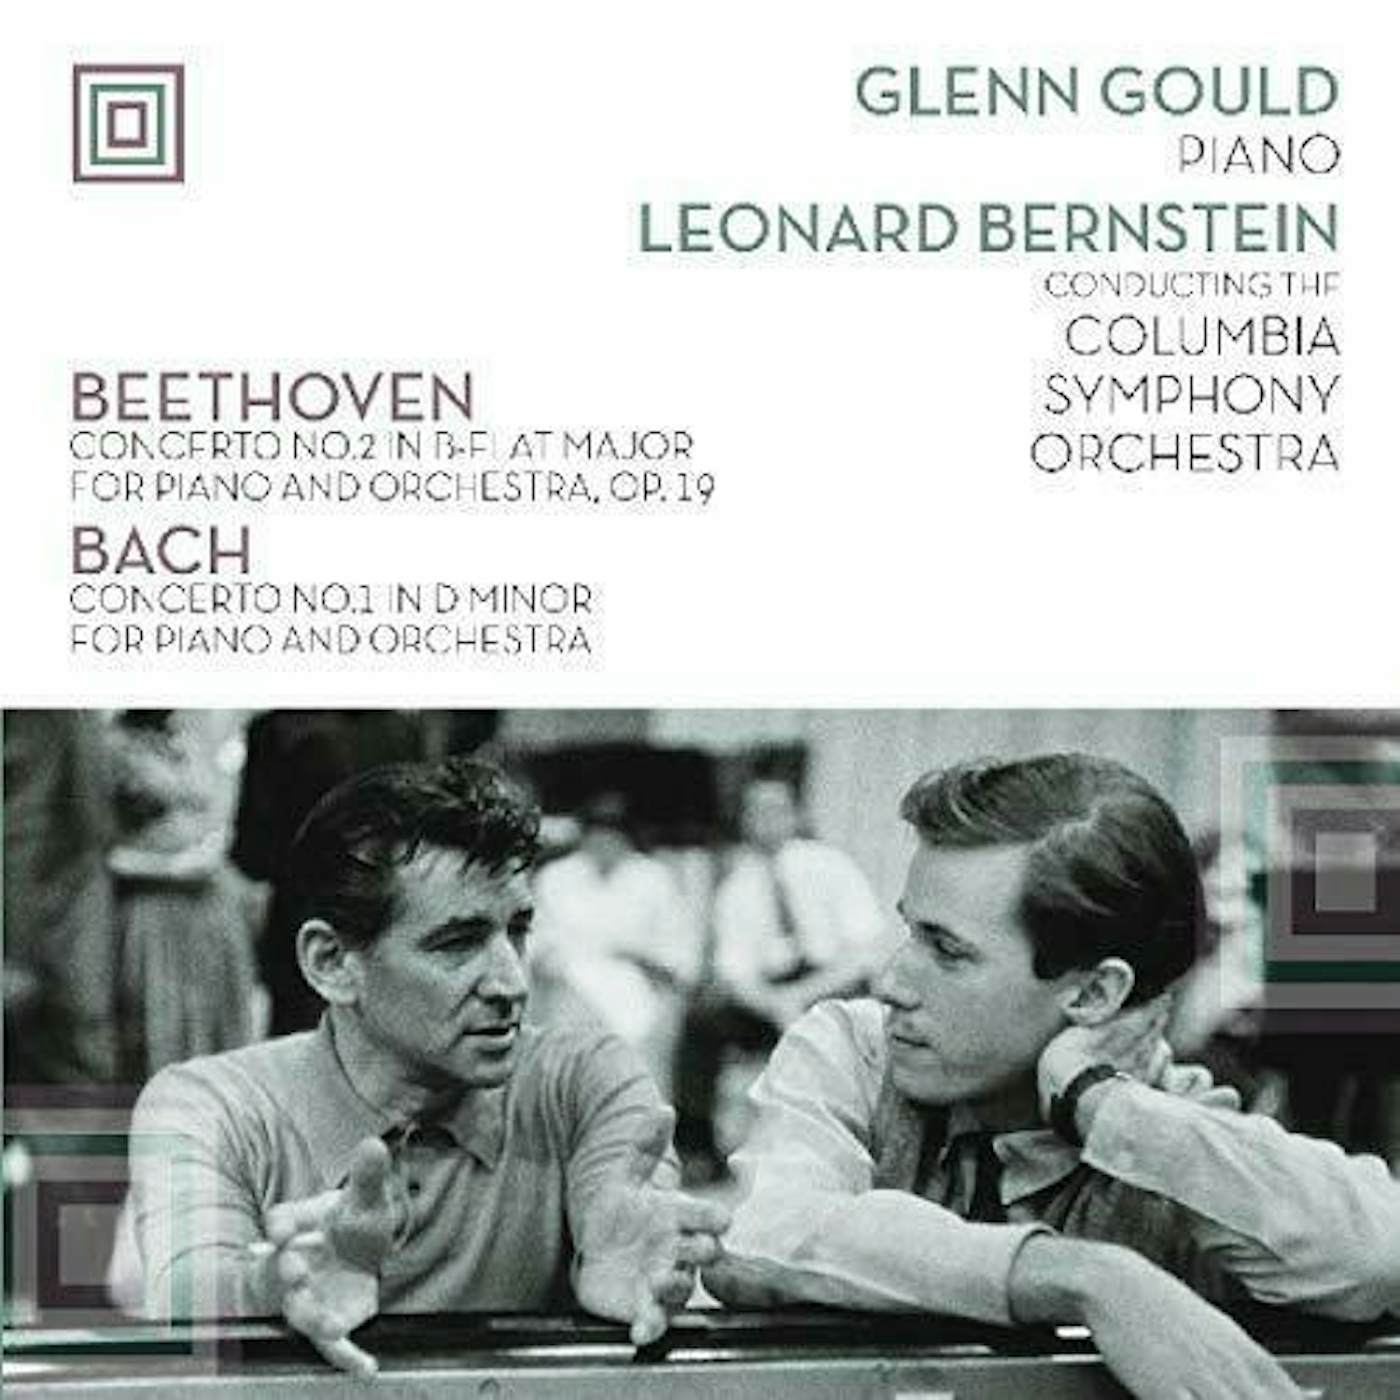 Glenn Gould PLAYS BEETHOVEN CONCERTO NO. 2 & BACH CONCERTO NO. 1 (180G) Vinyl Record